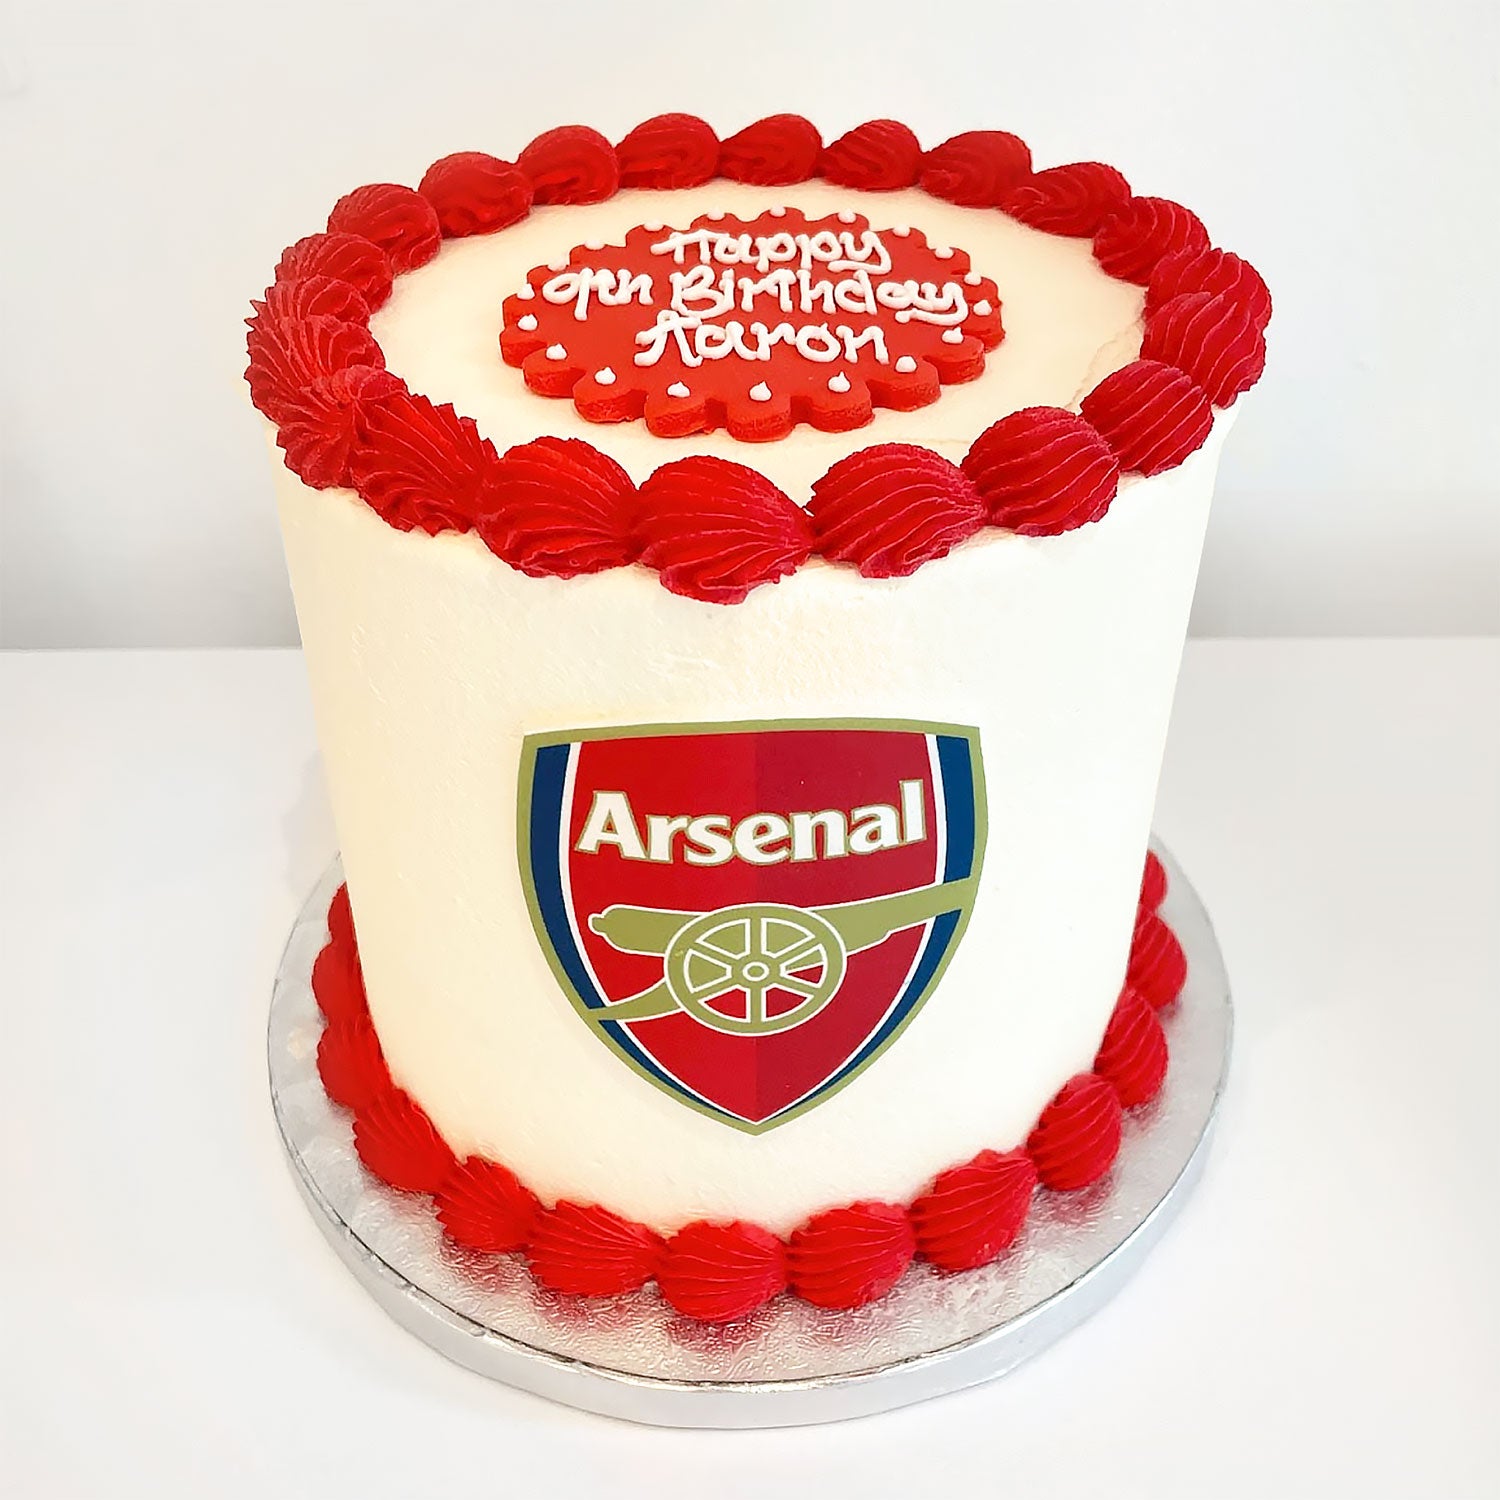 Arsenal Soccer Cake Topper Edible Birthday Cupcake Decoration | eBay